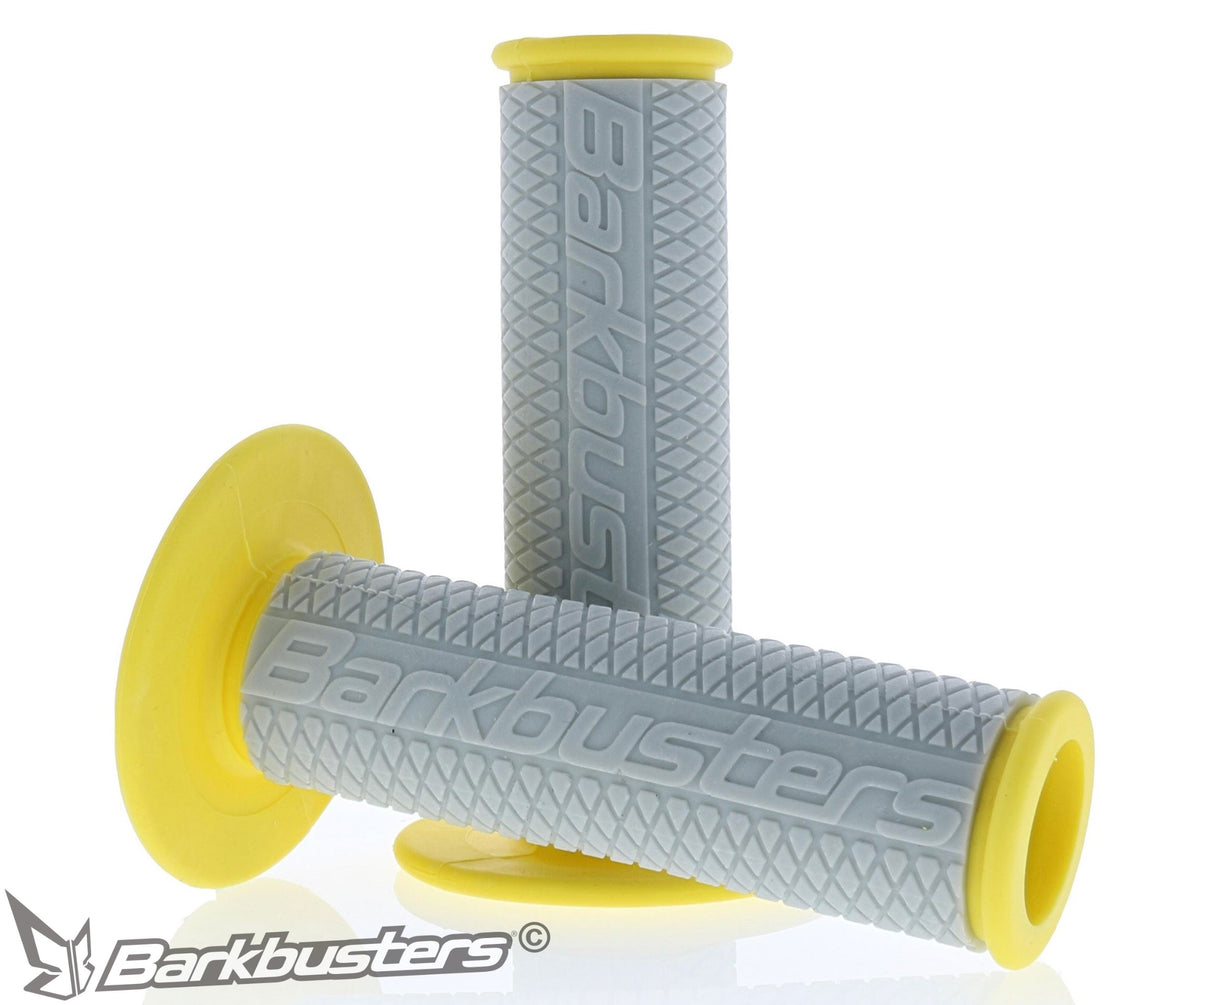 Barkbuster Diamond Grip - Grey & Yellow